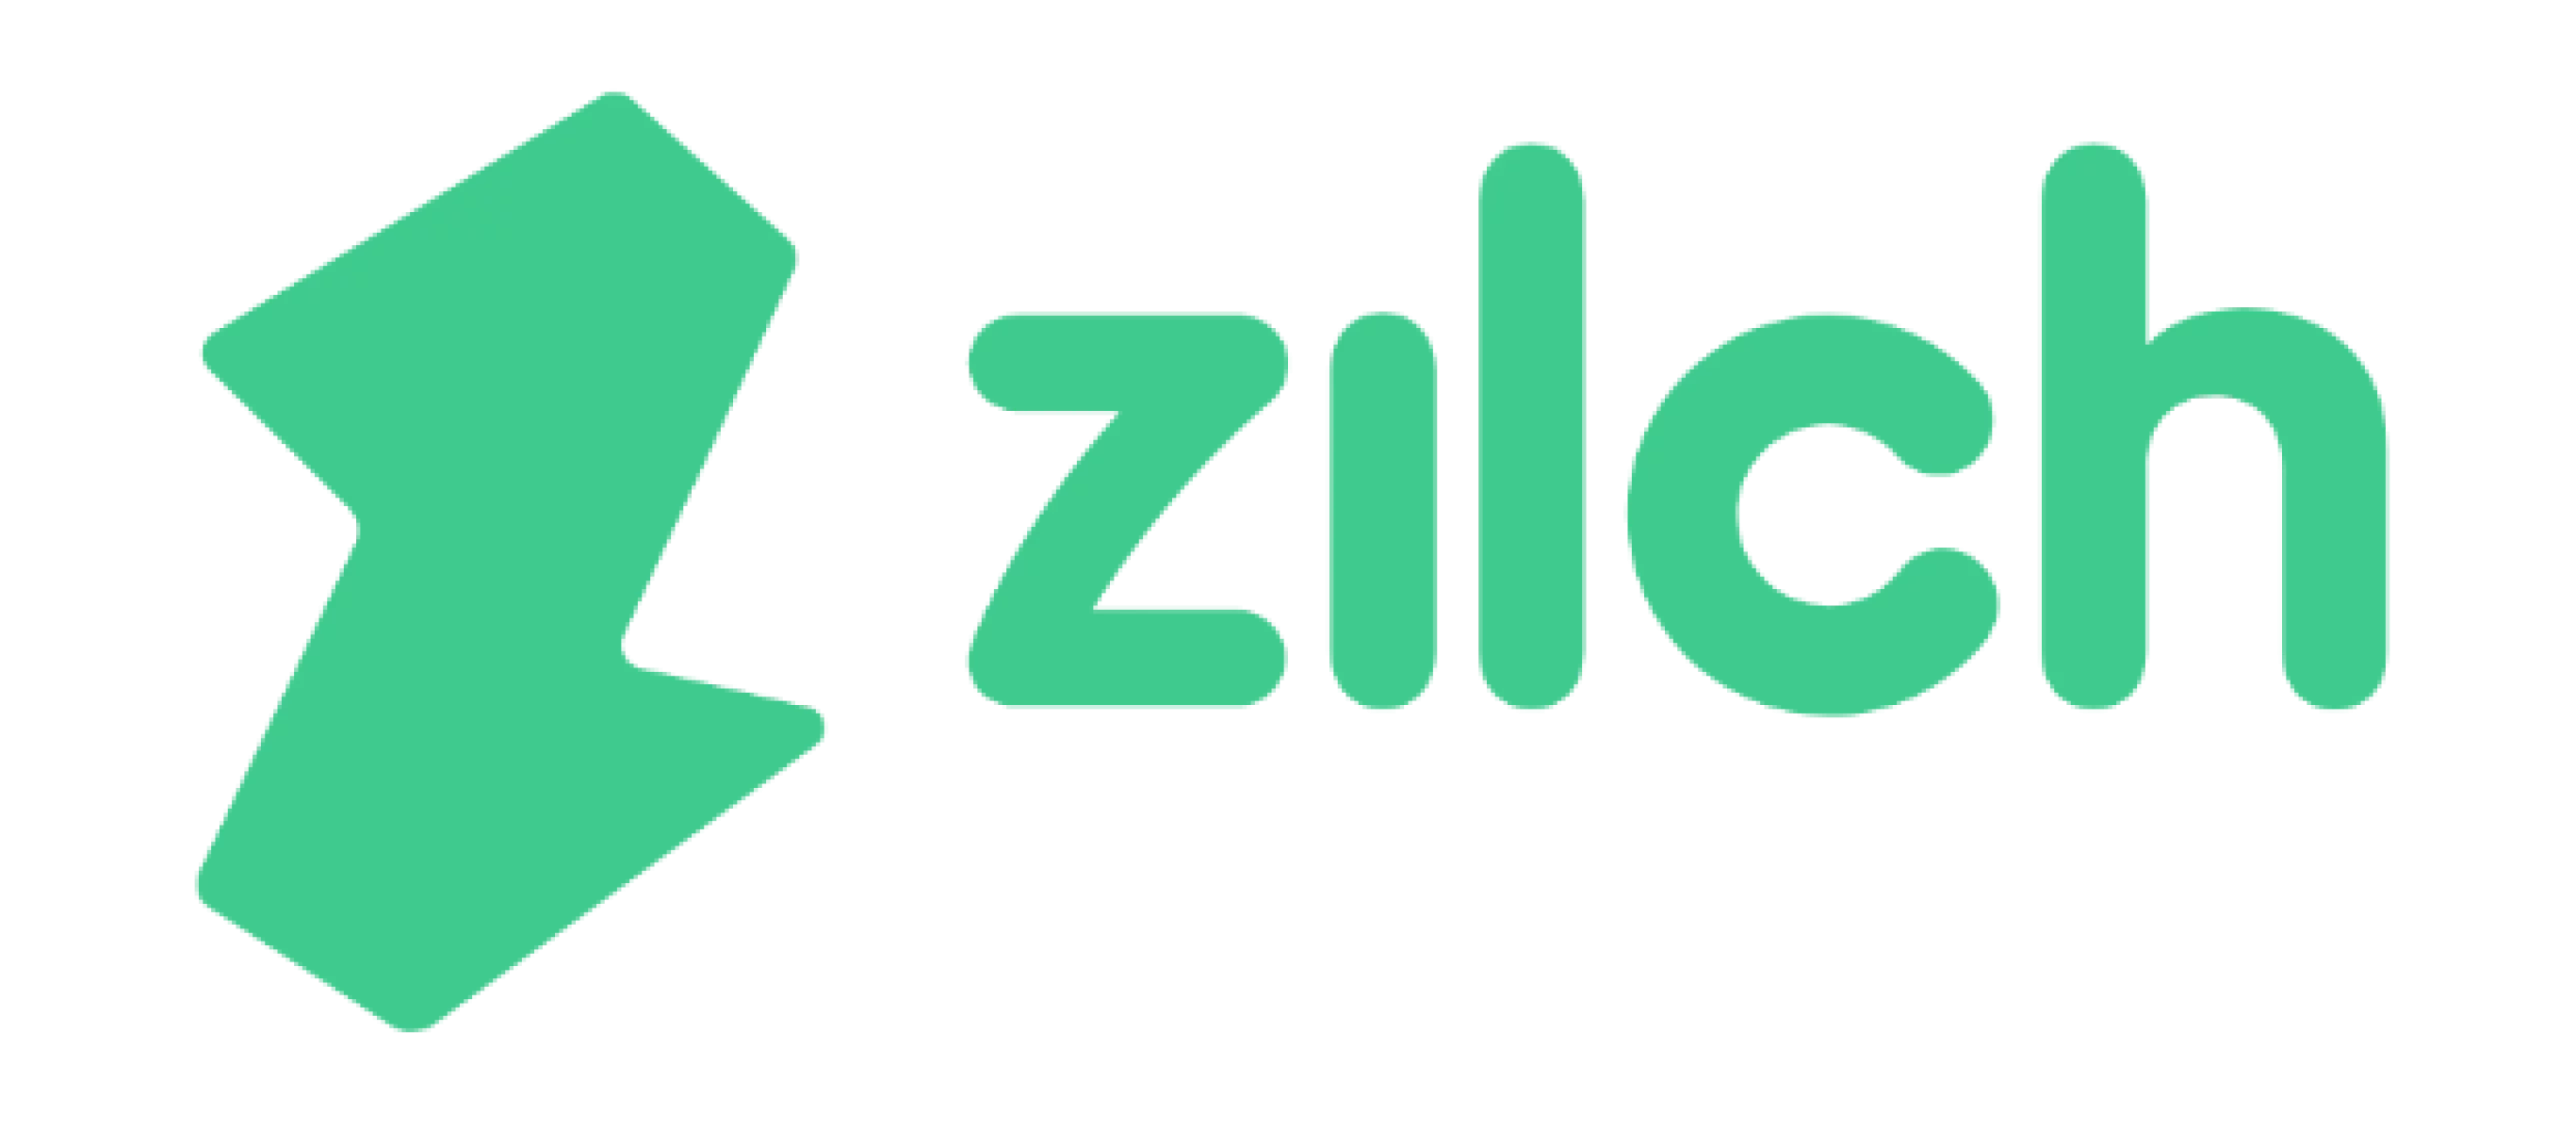 Zilch Logo